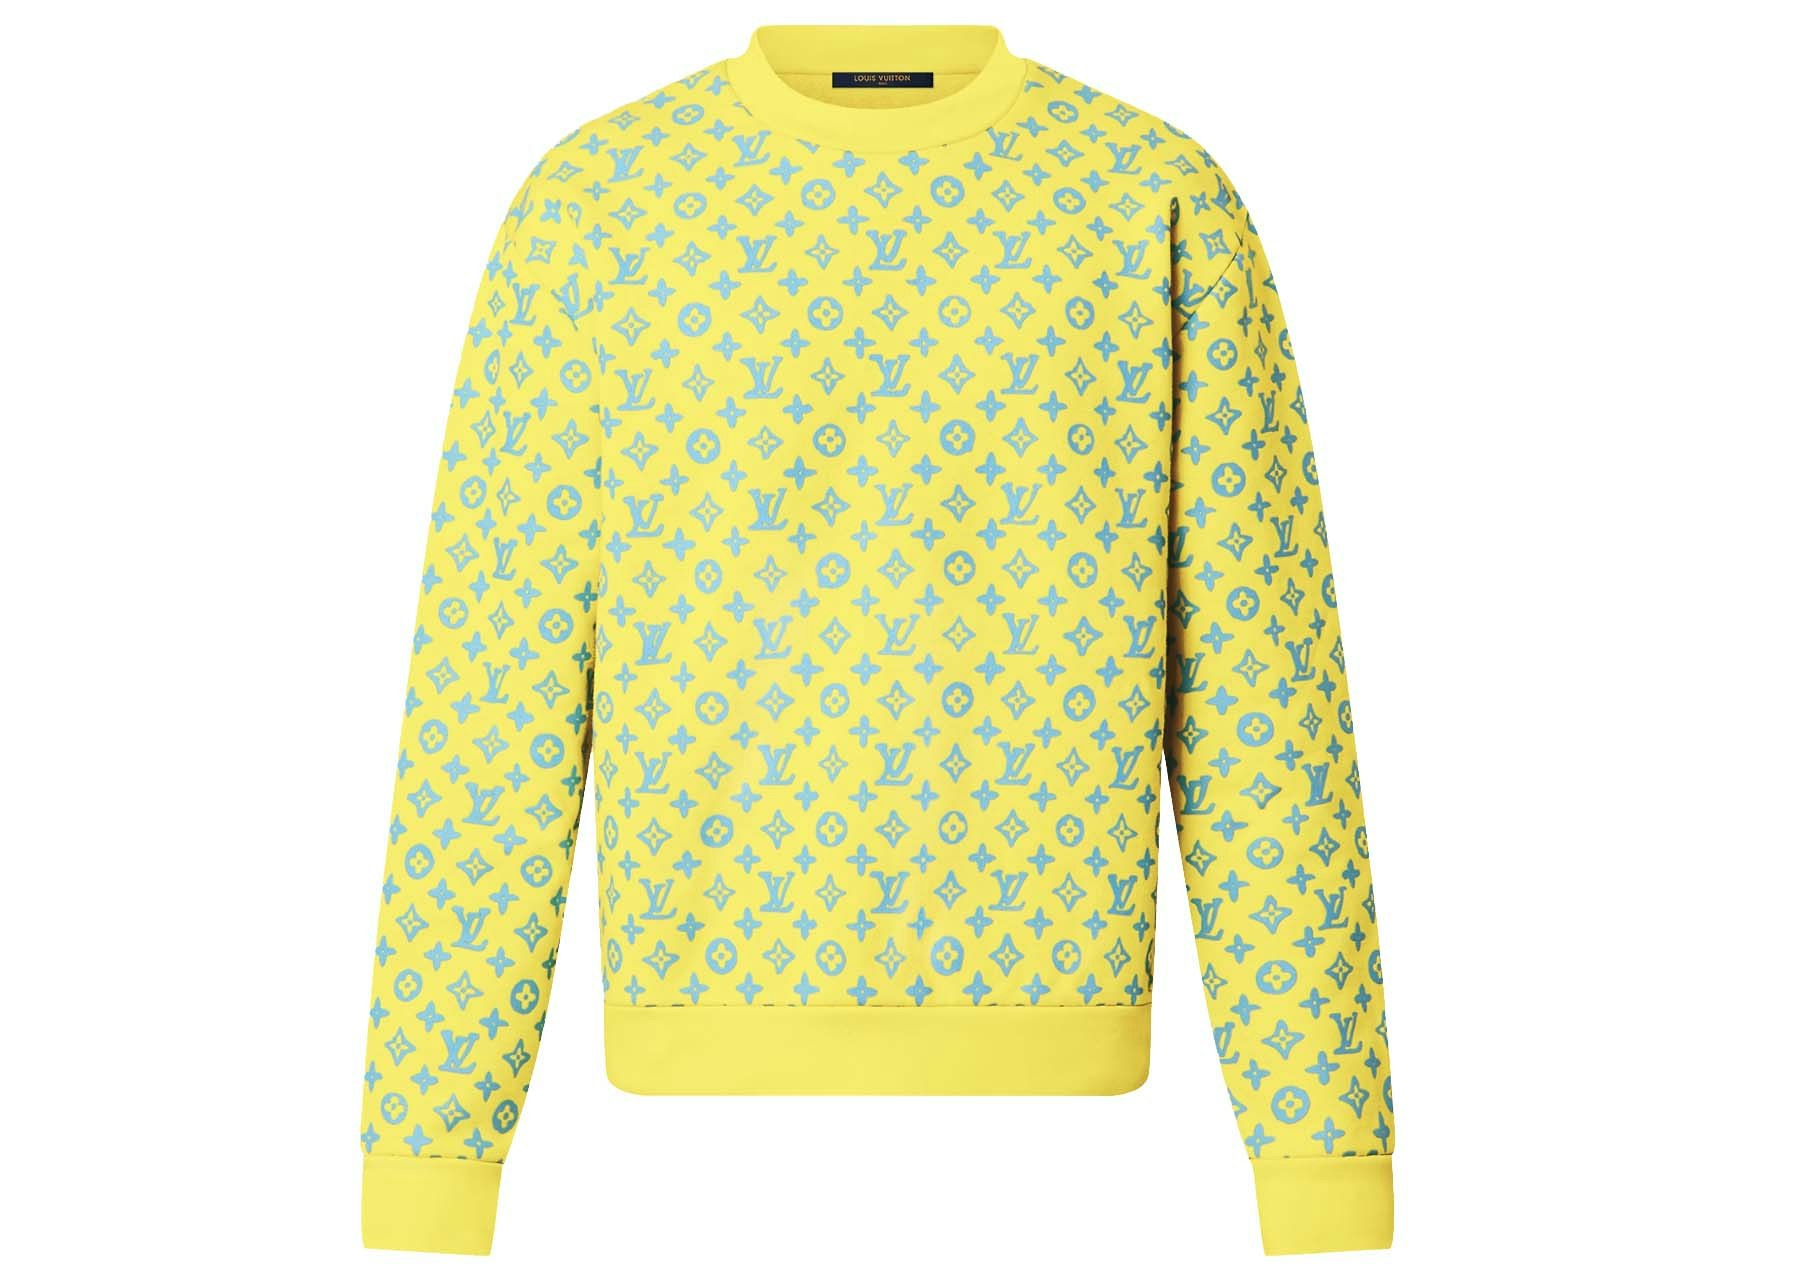 Louis Vuitton monogram rainbow playground graphic sweater Veryrare Limited  3XL  eBay